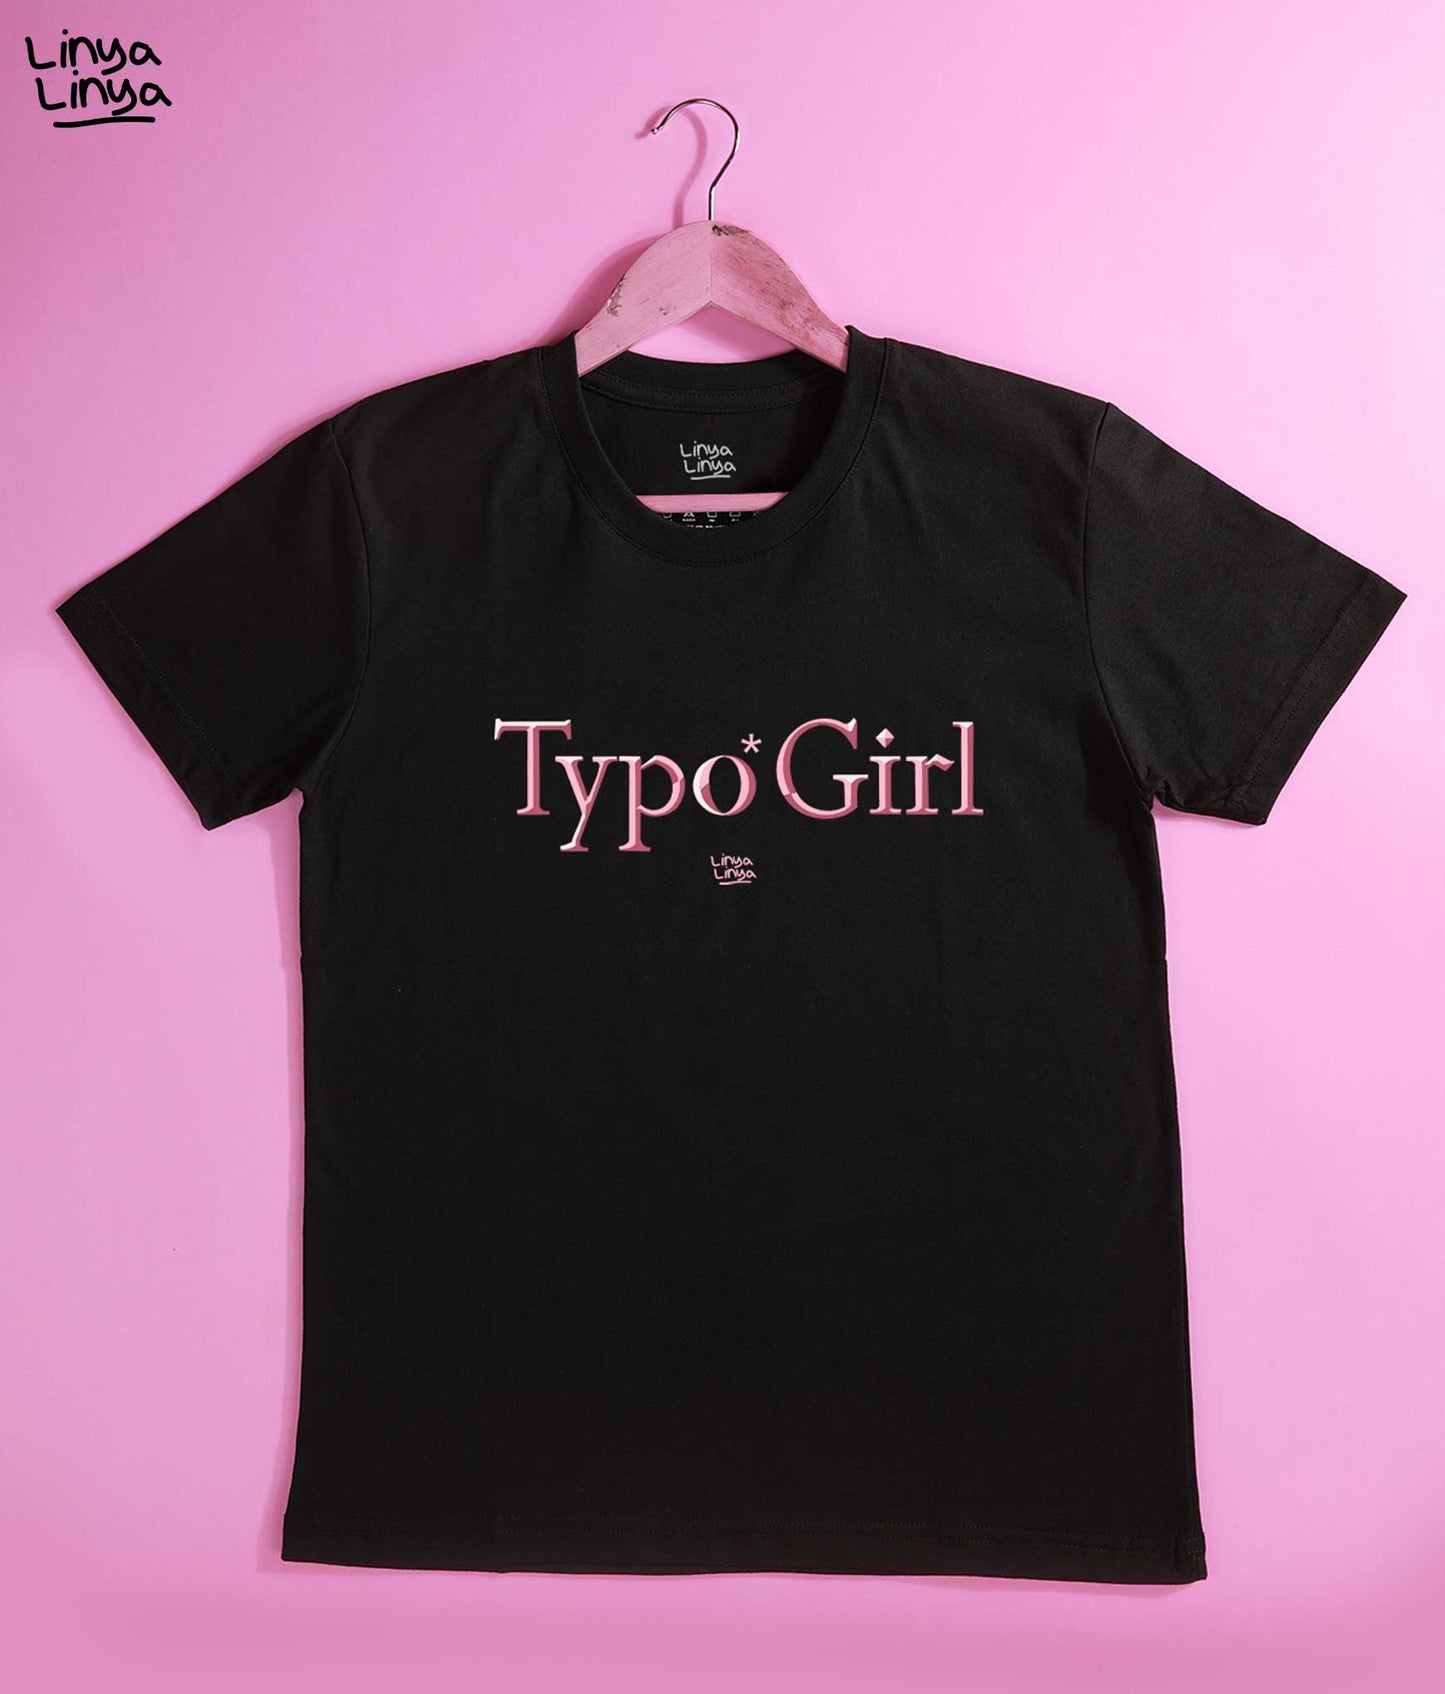 TYPO GIRL (Black)